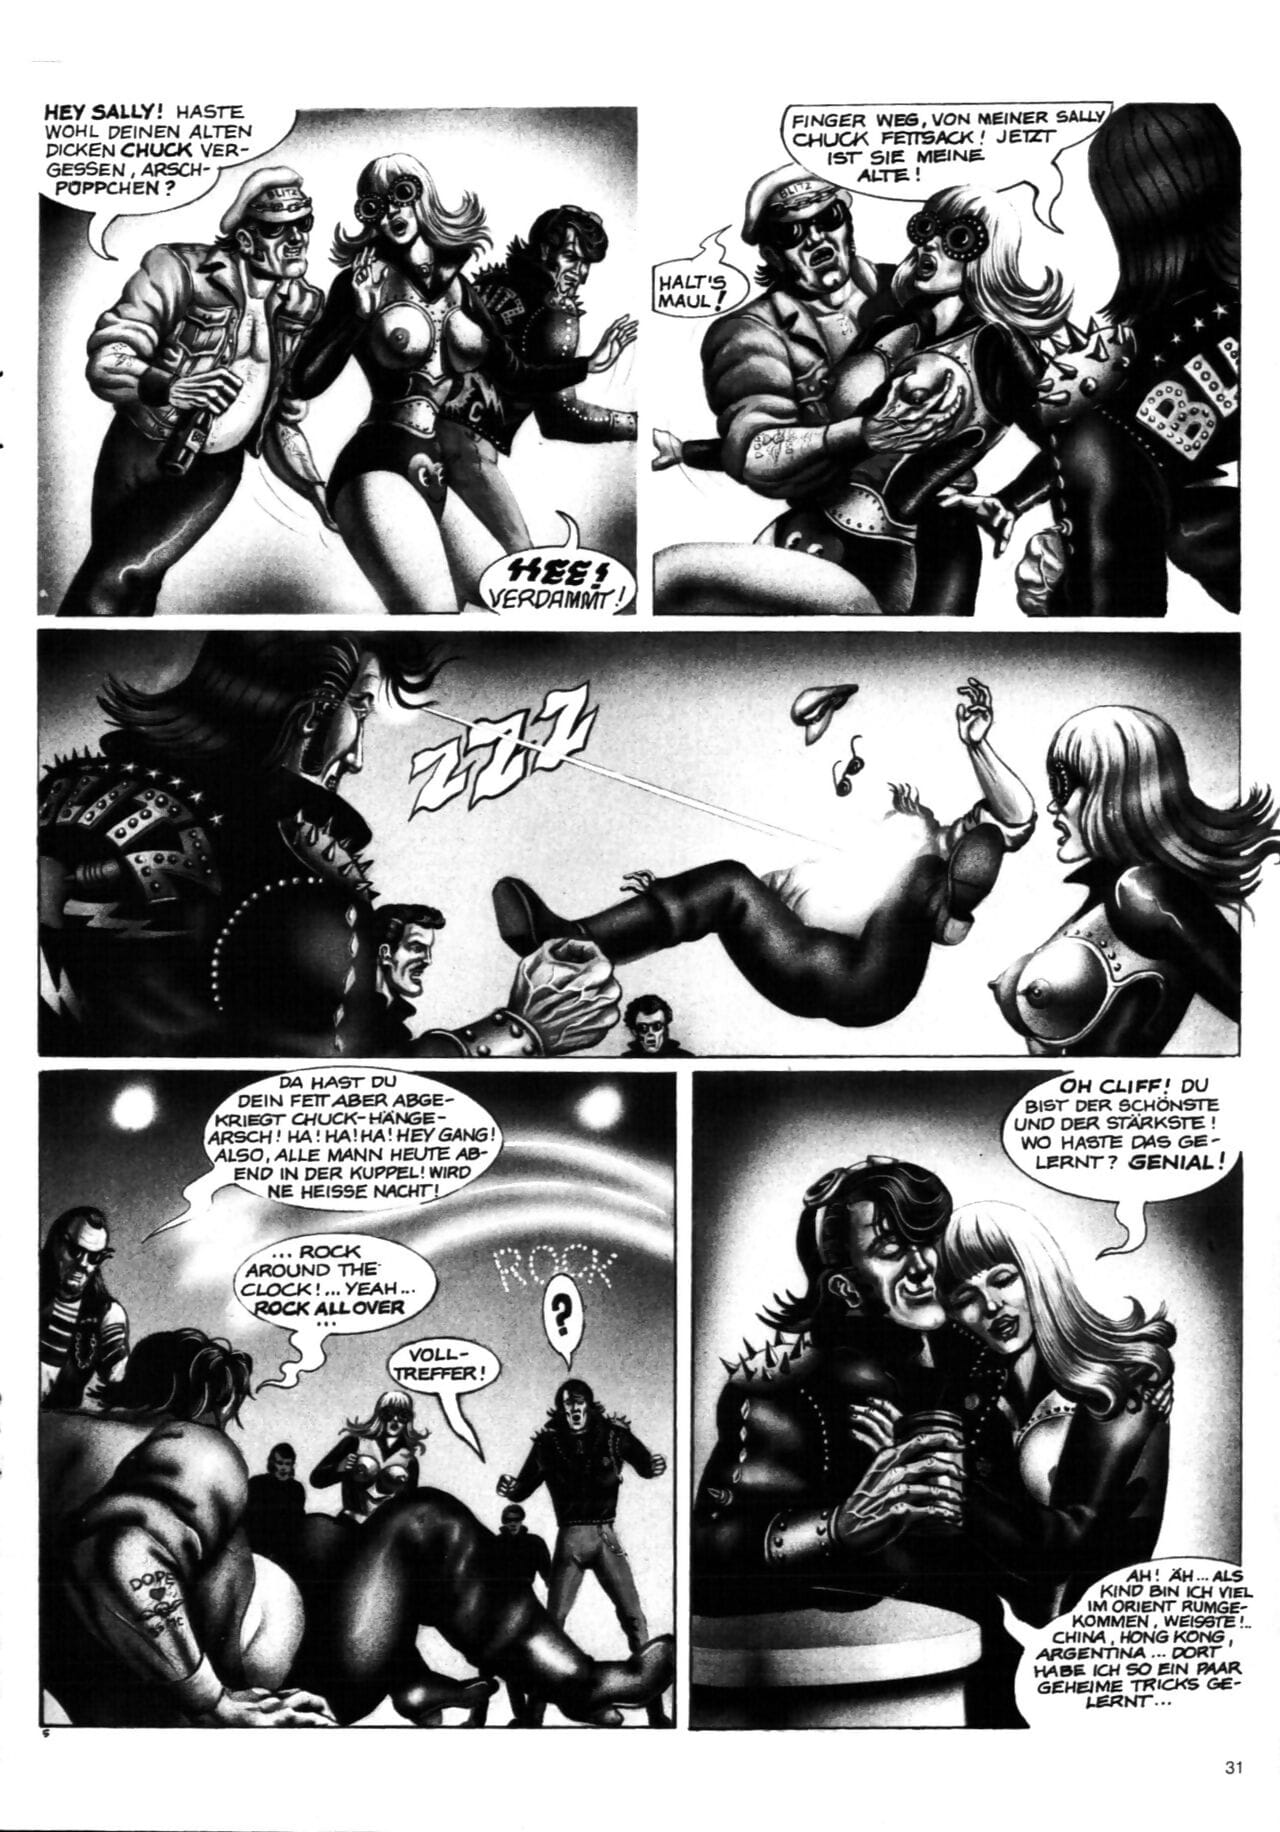 schwermetall #010 一部分 2 page 1